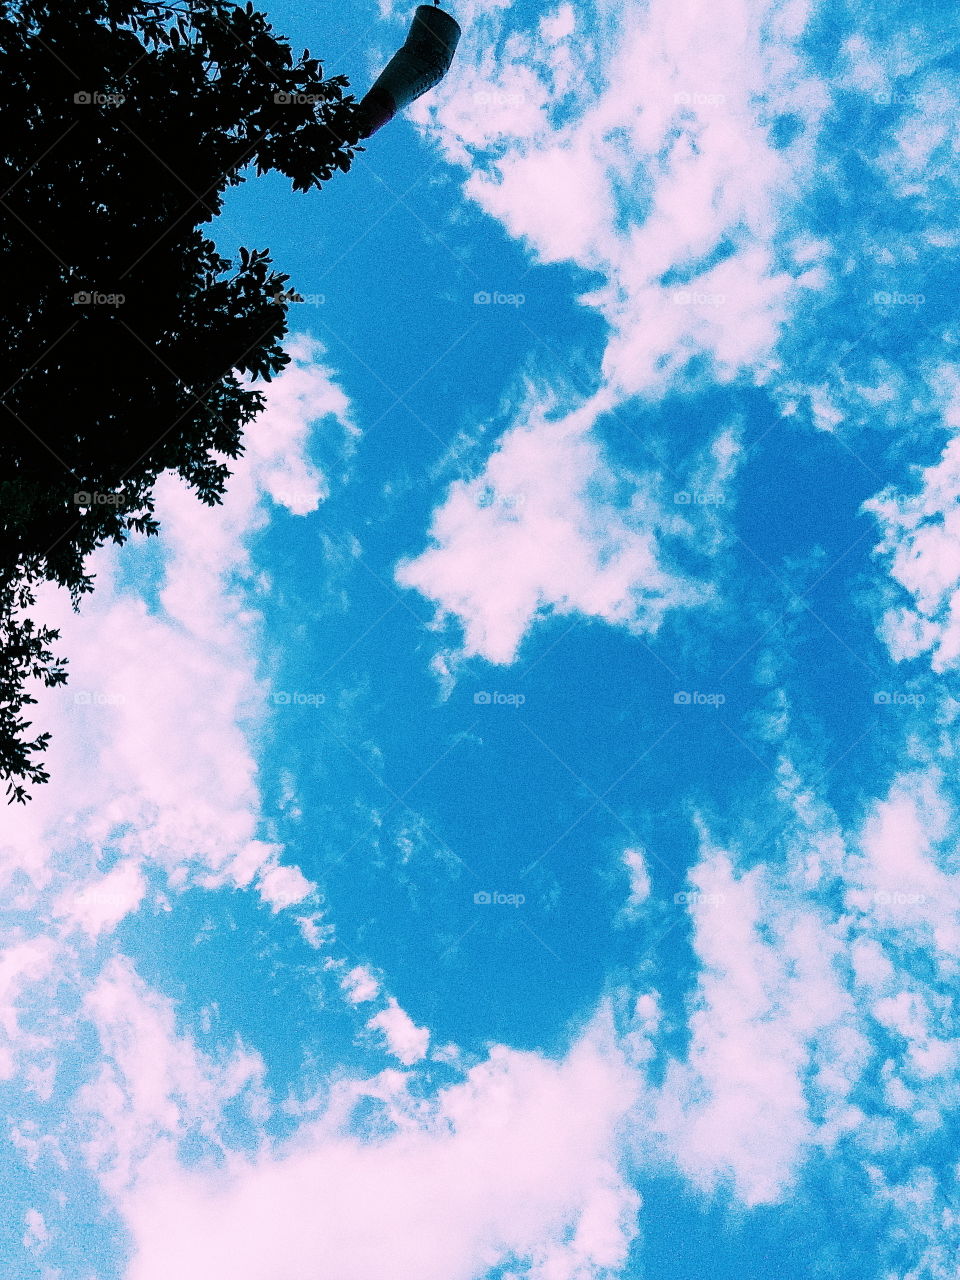 My favorite sky ☁